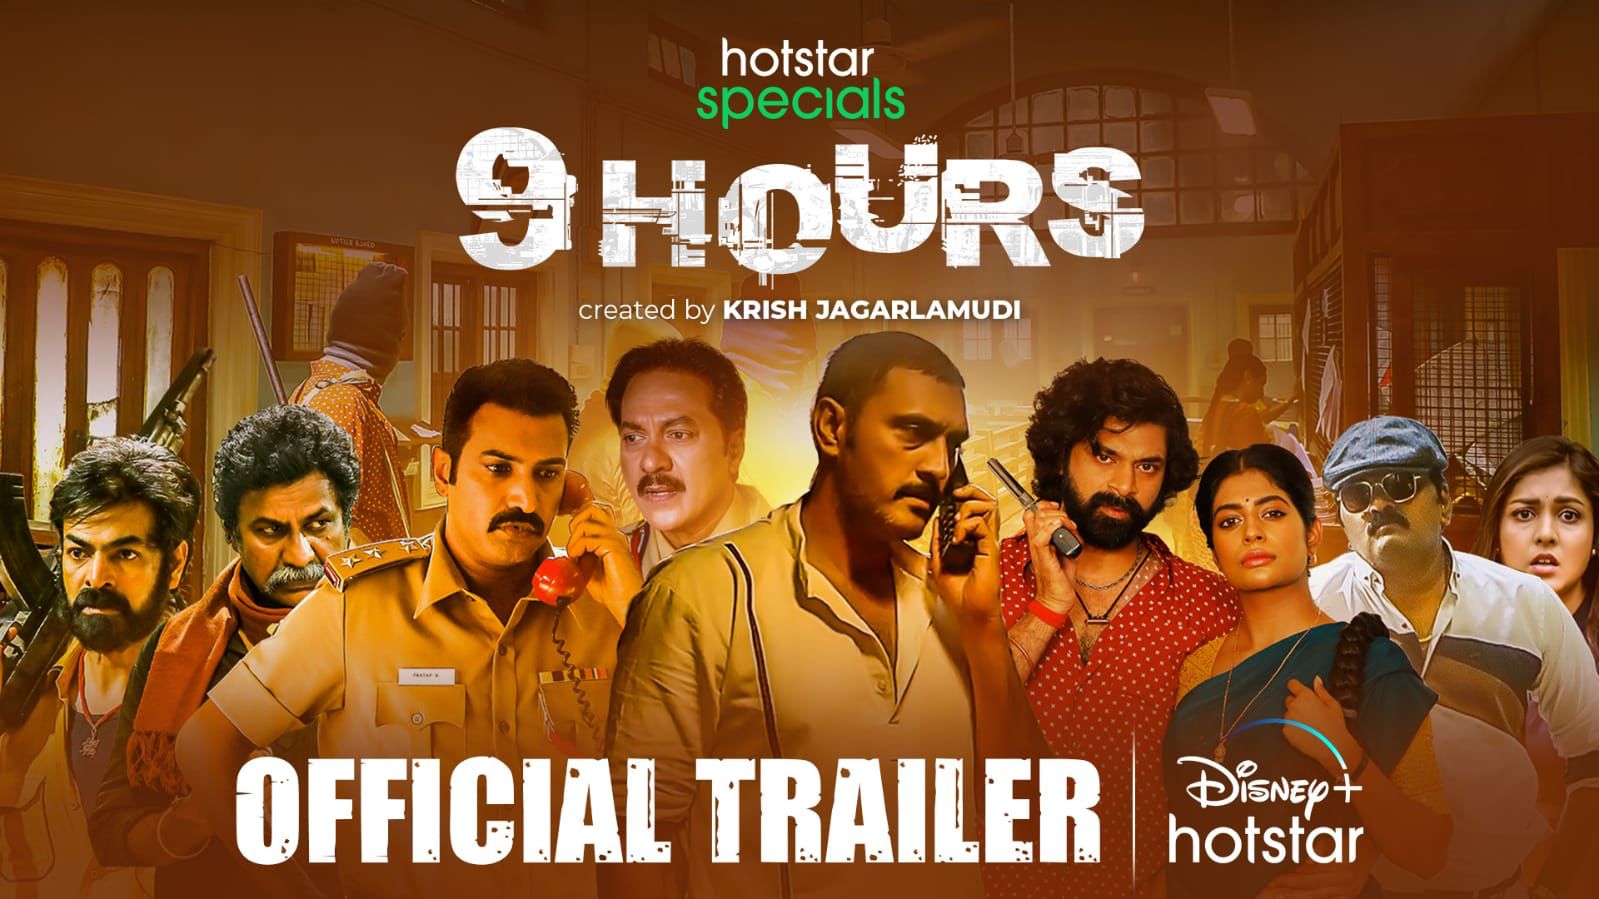  Varun Tej launches 9 Hours trailer